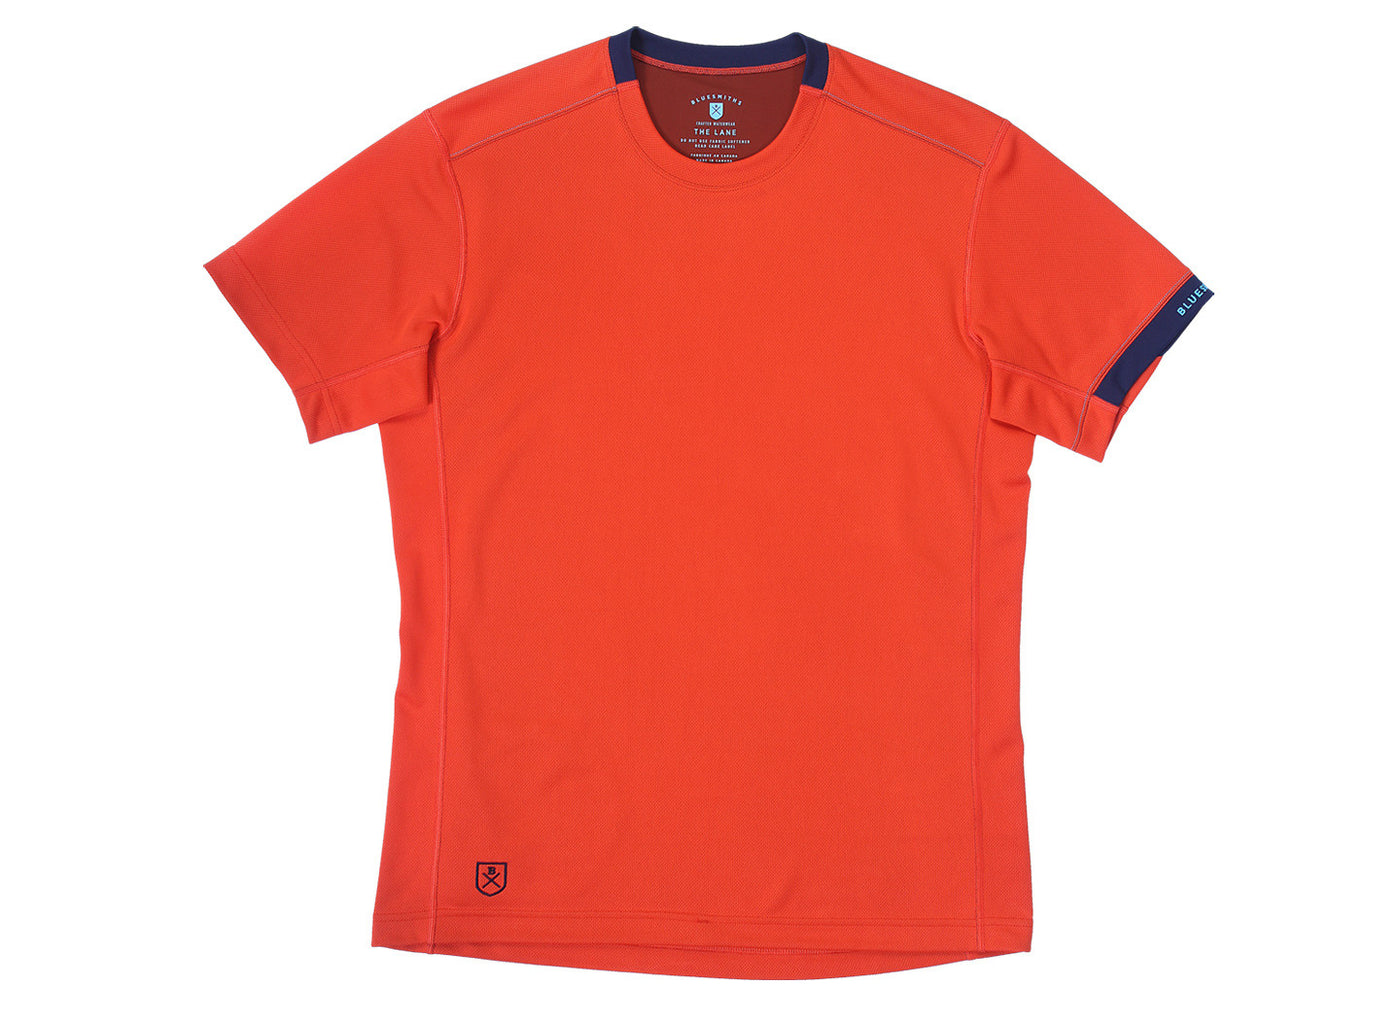  The Lane Hydrophobic Shirt for Men in Sunrise Orange - The World's Finest Waterwear | BLUESMITHS